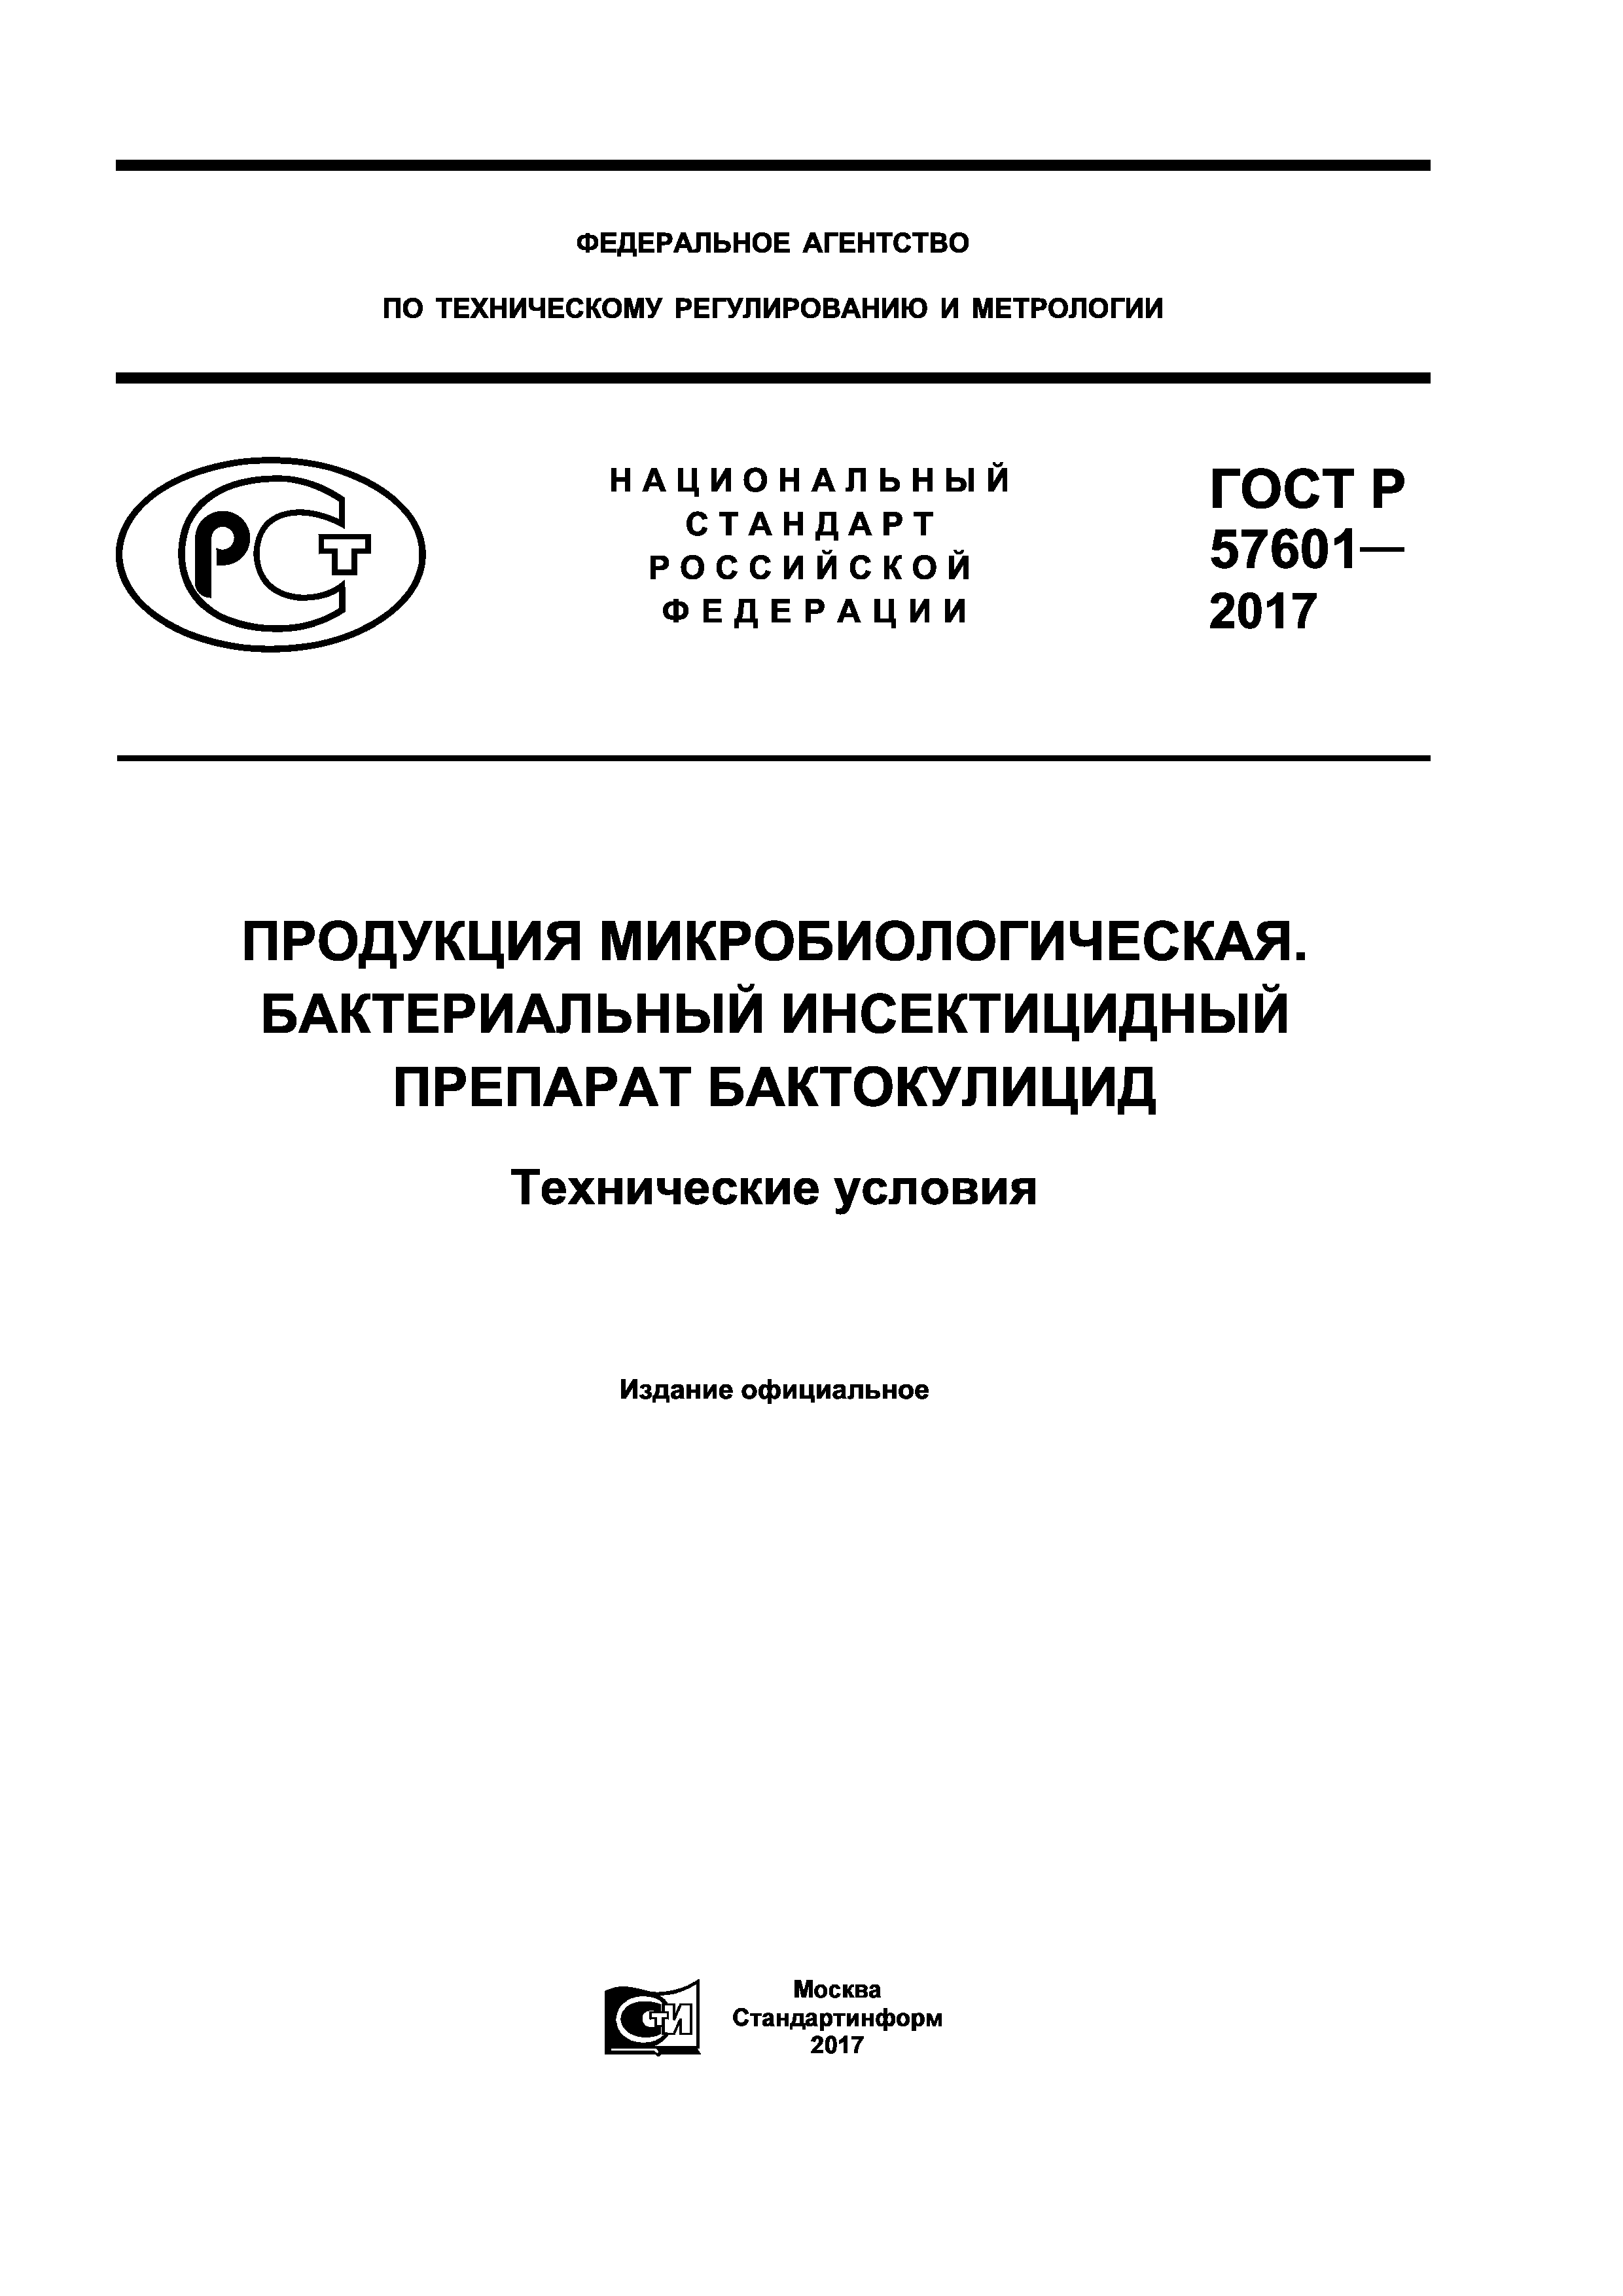 ГОСТ Р 57601-2017